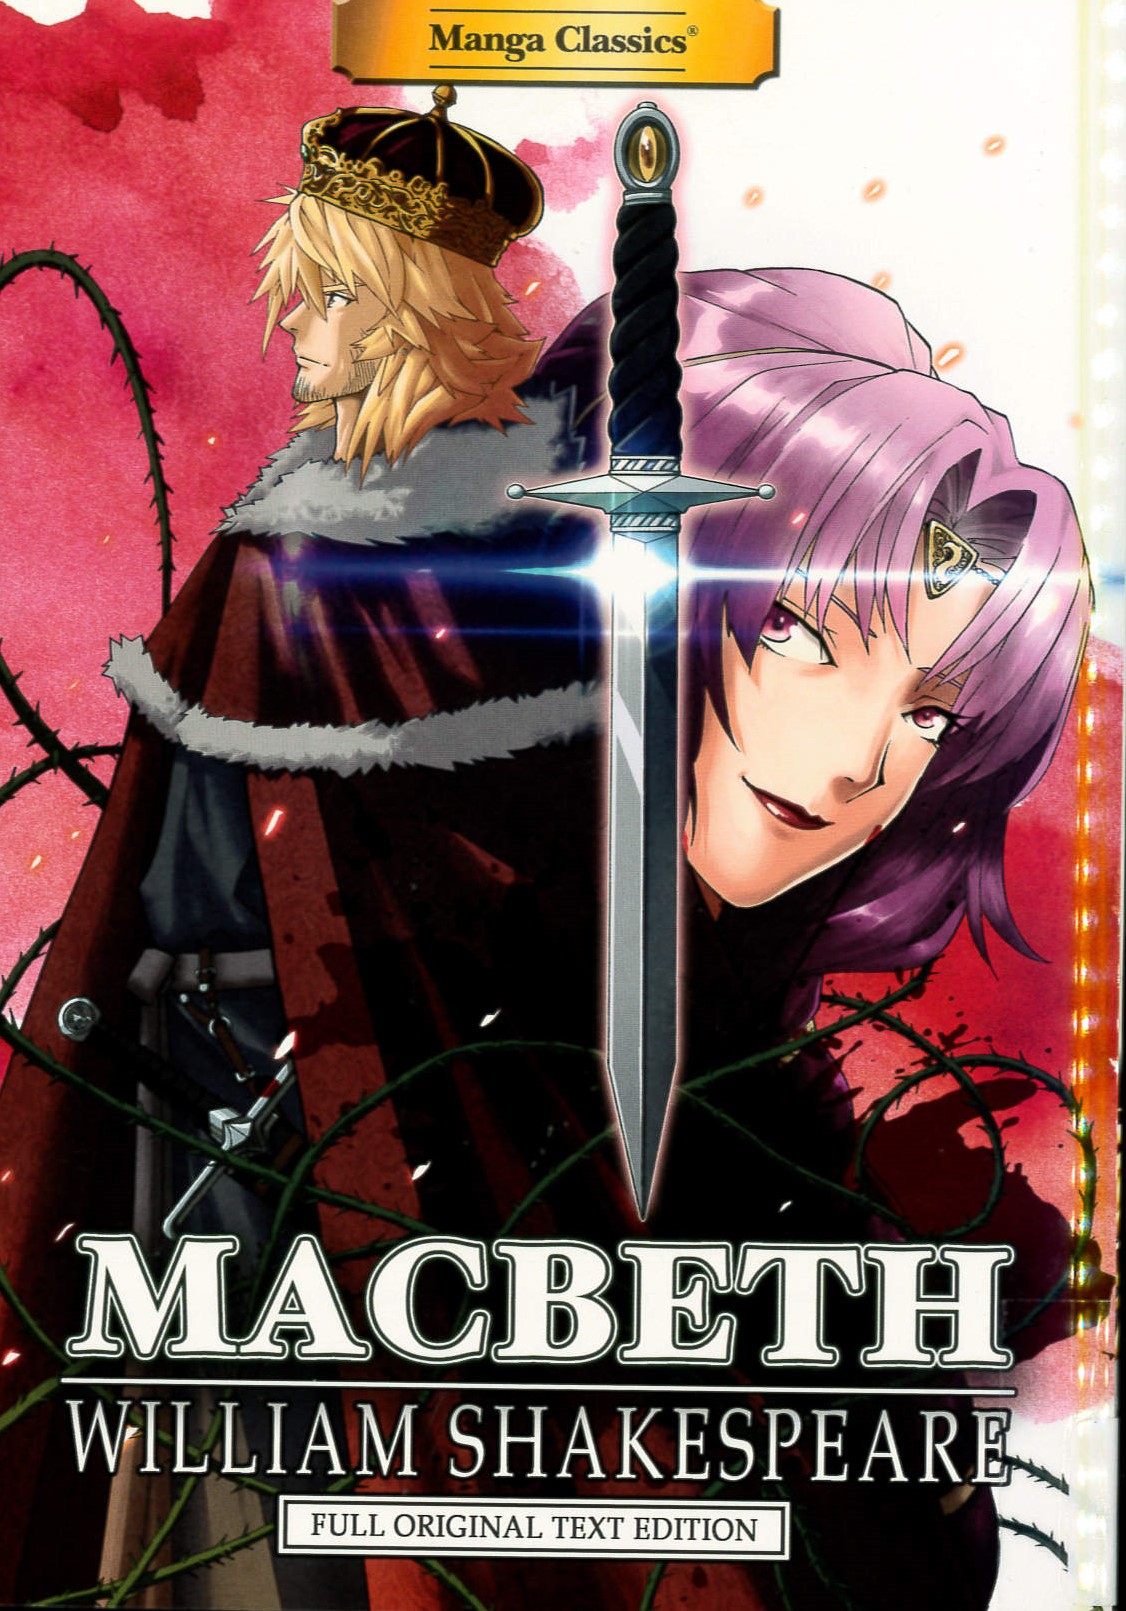 Macbeth /